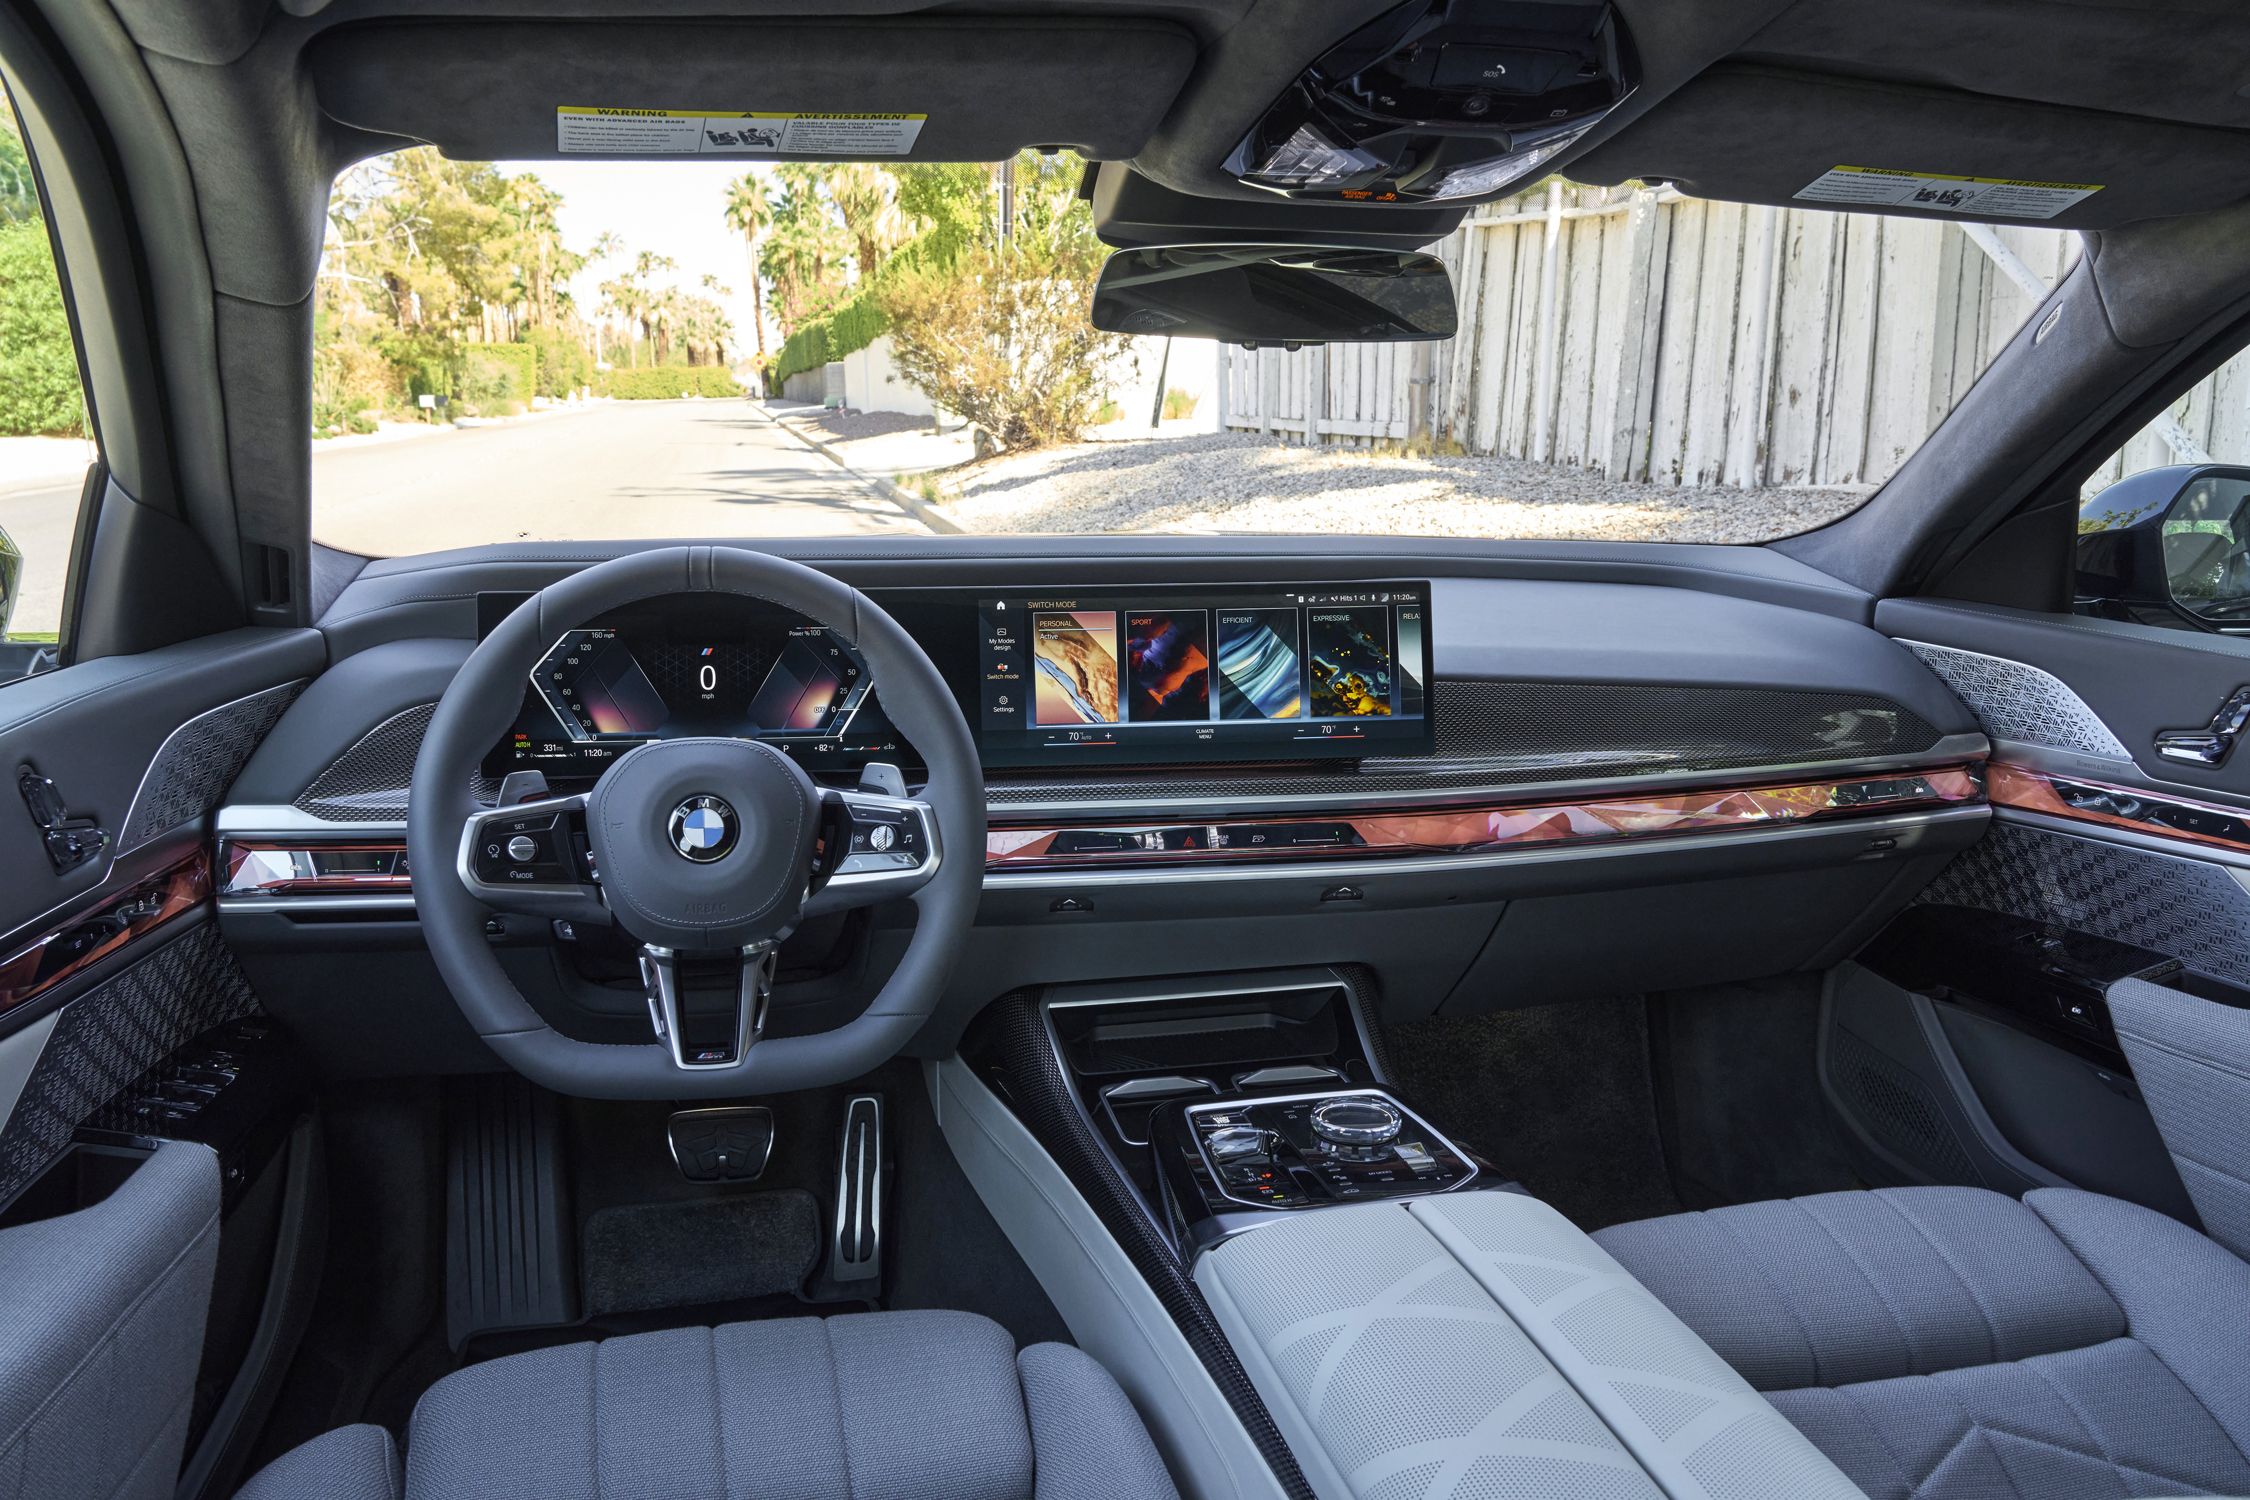 740i, 740i xDrive, 760i xDrive Full-Sized Luxury Sedans | BMW USA